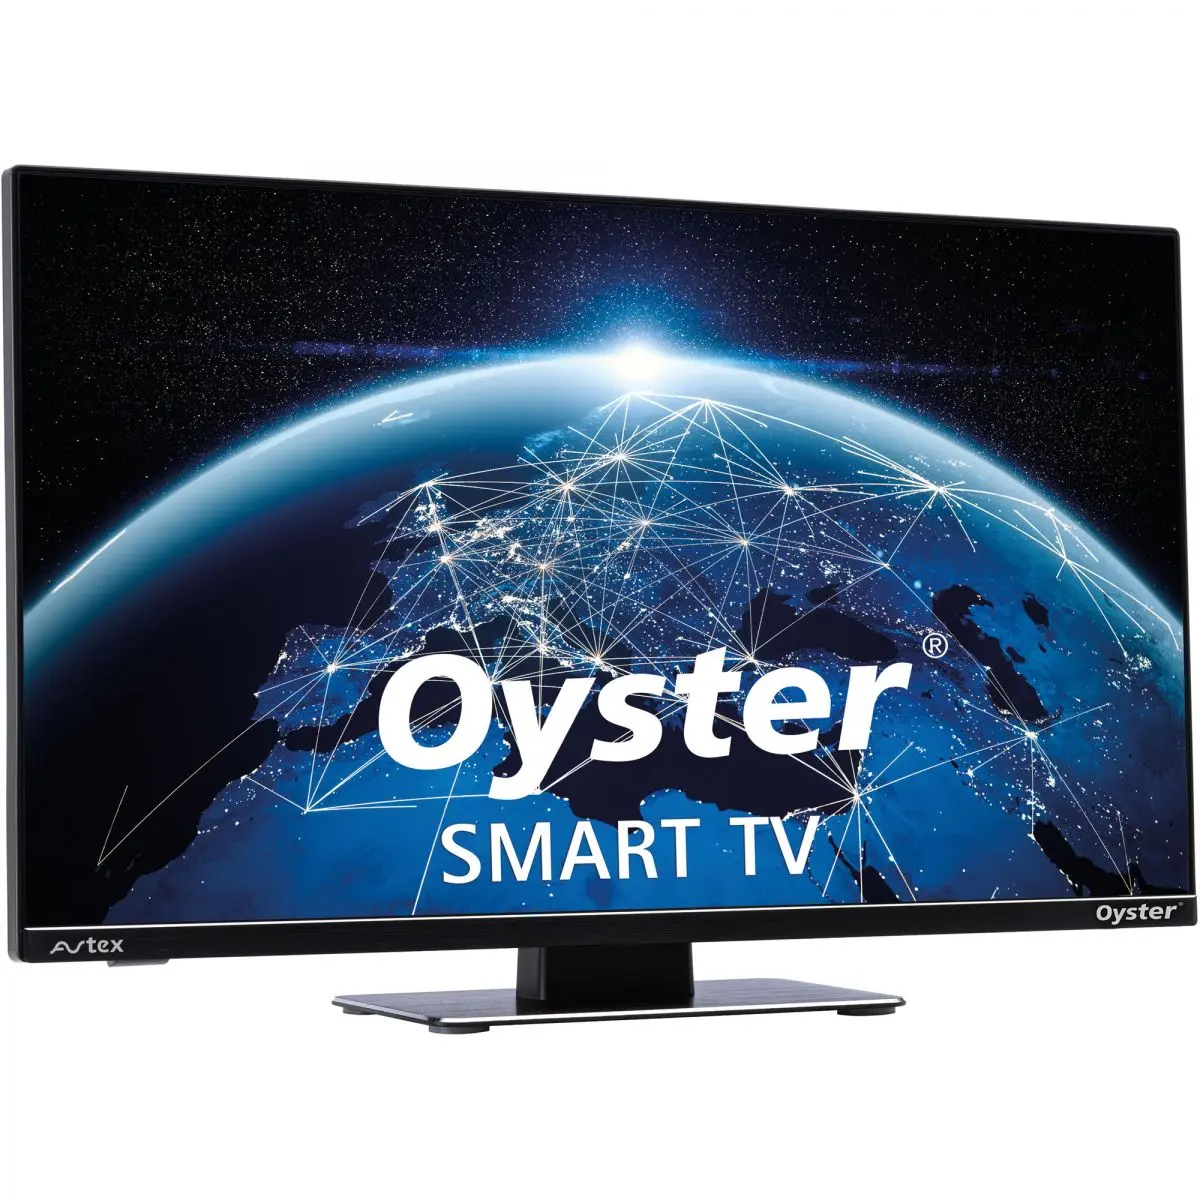 Smart TV Oyster 32, 12/230 volți